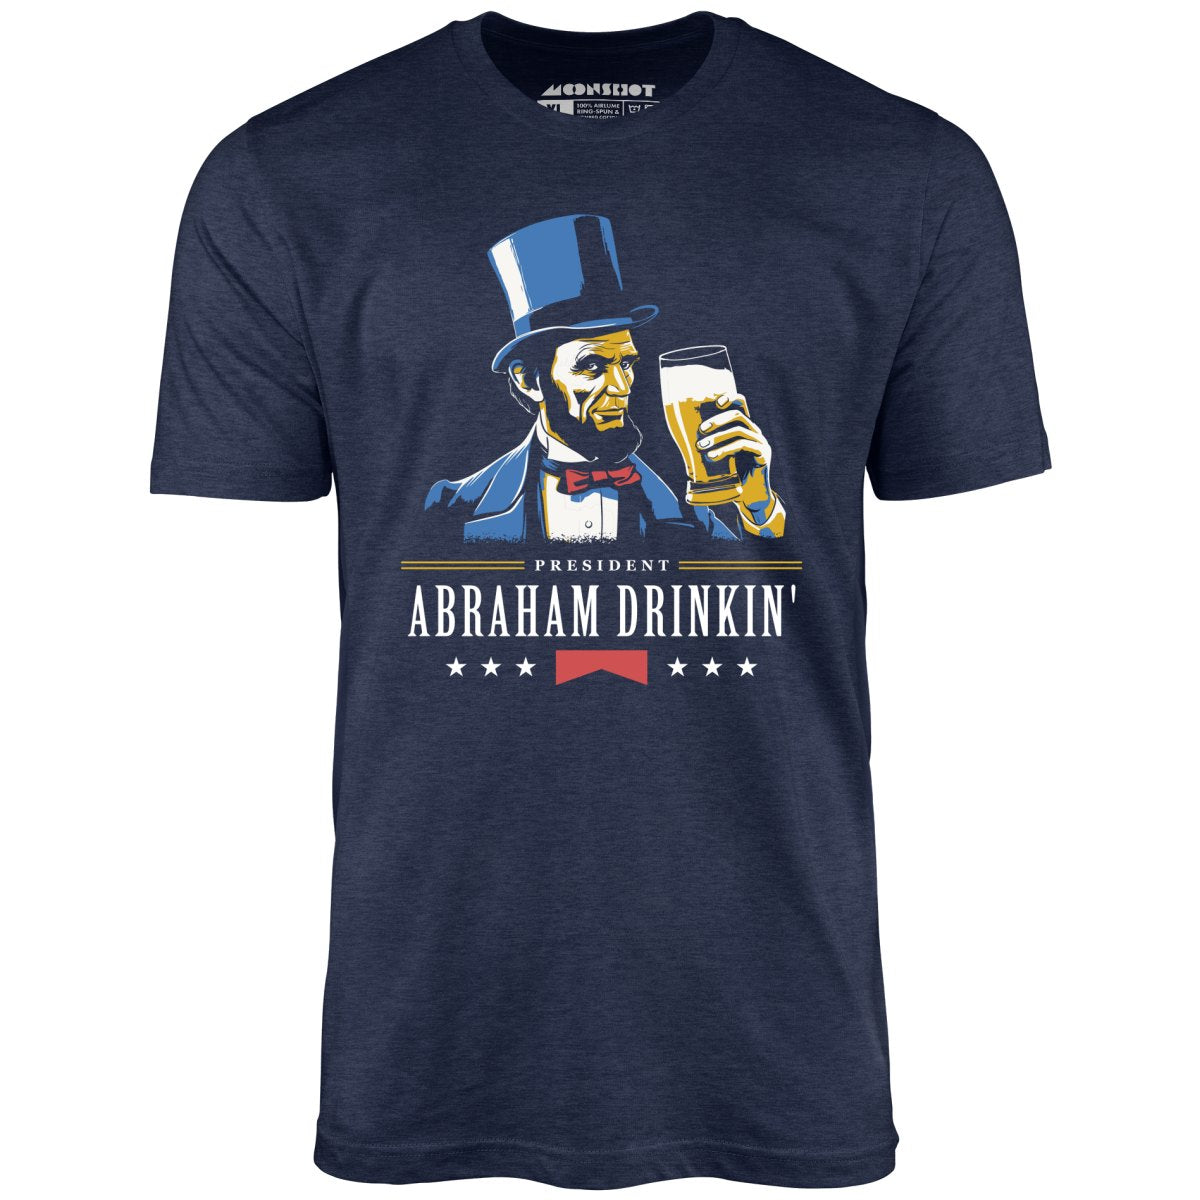 President Abraham Drinkin' - Unisex T-Shirt